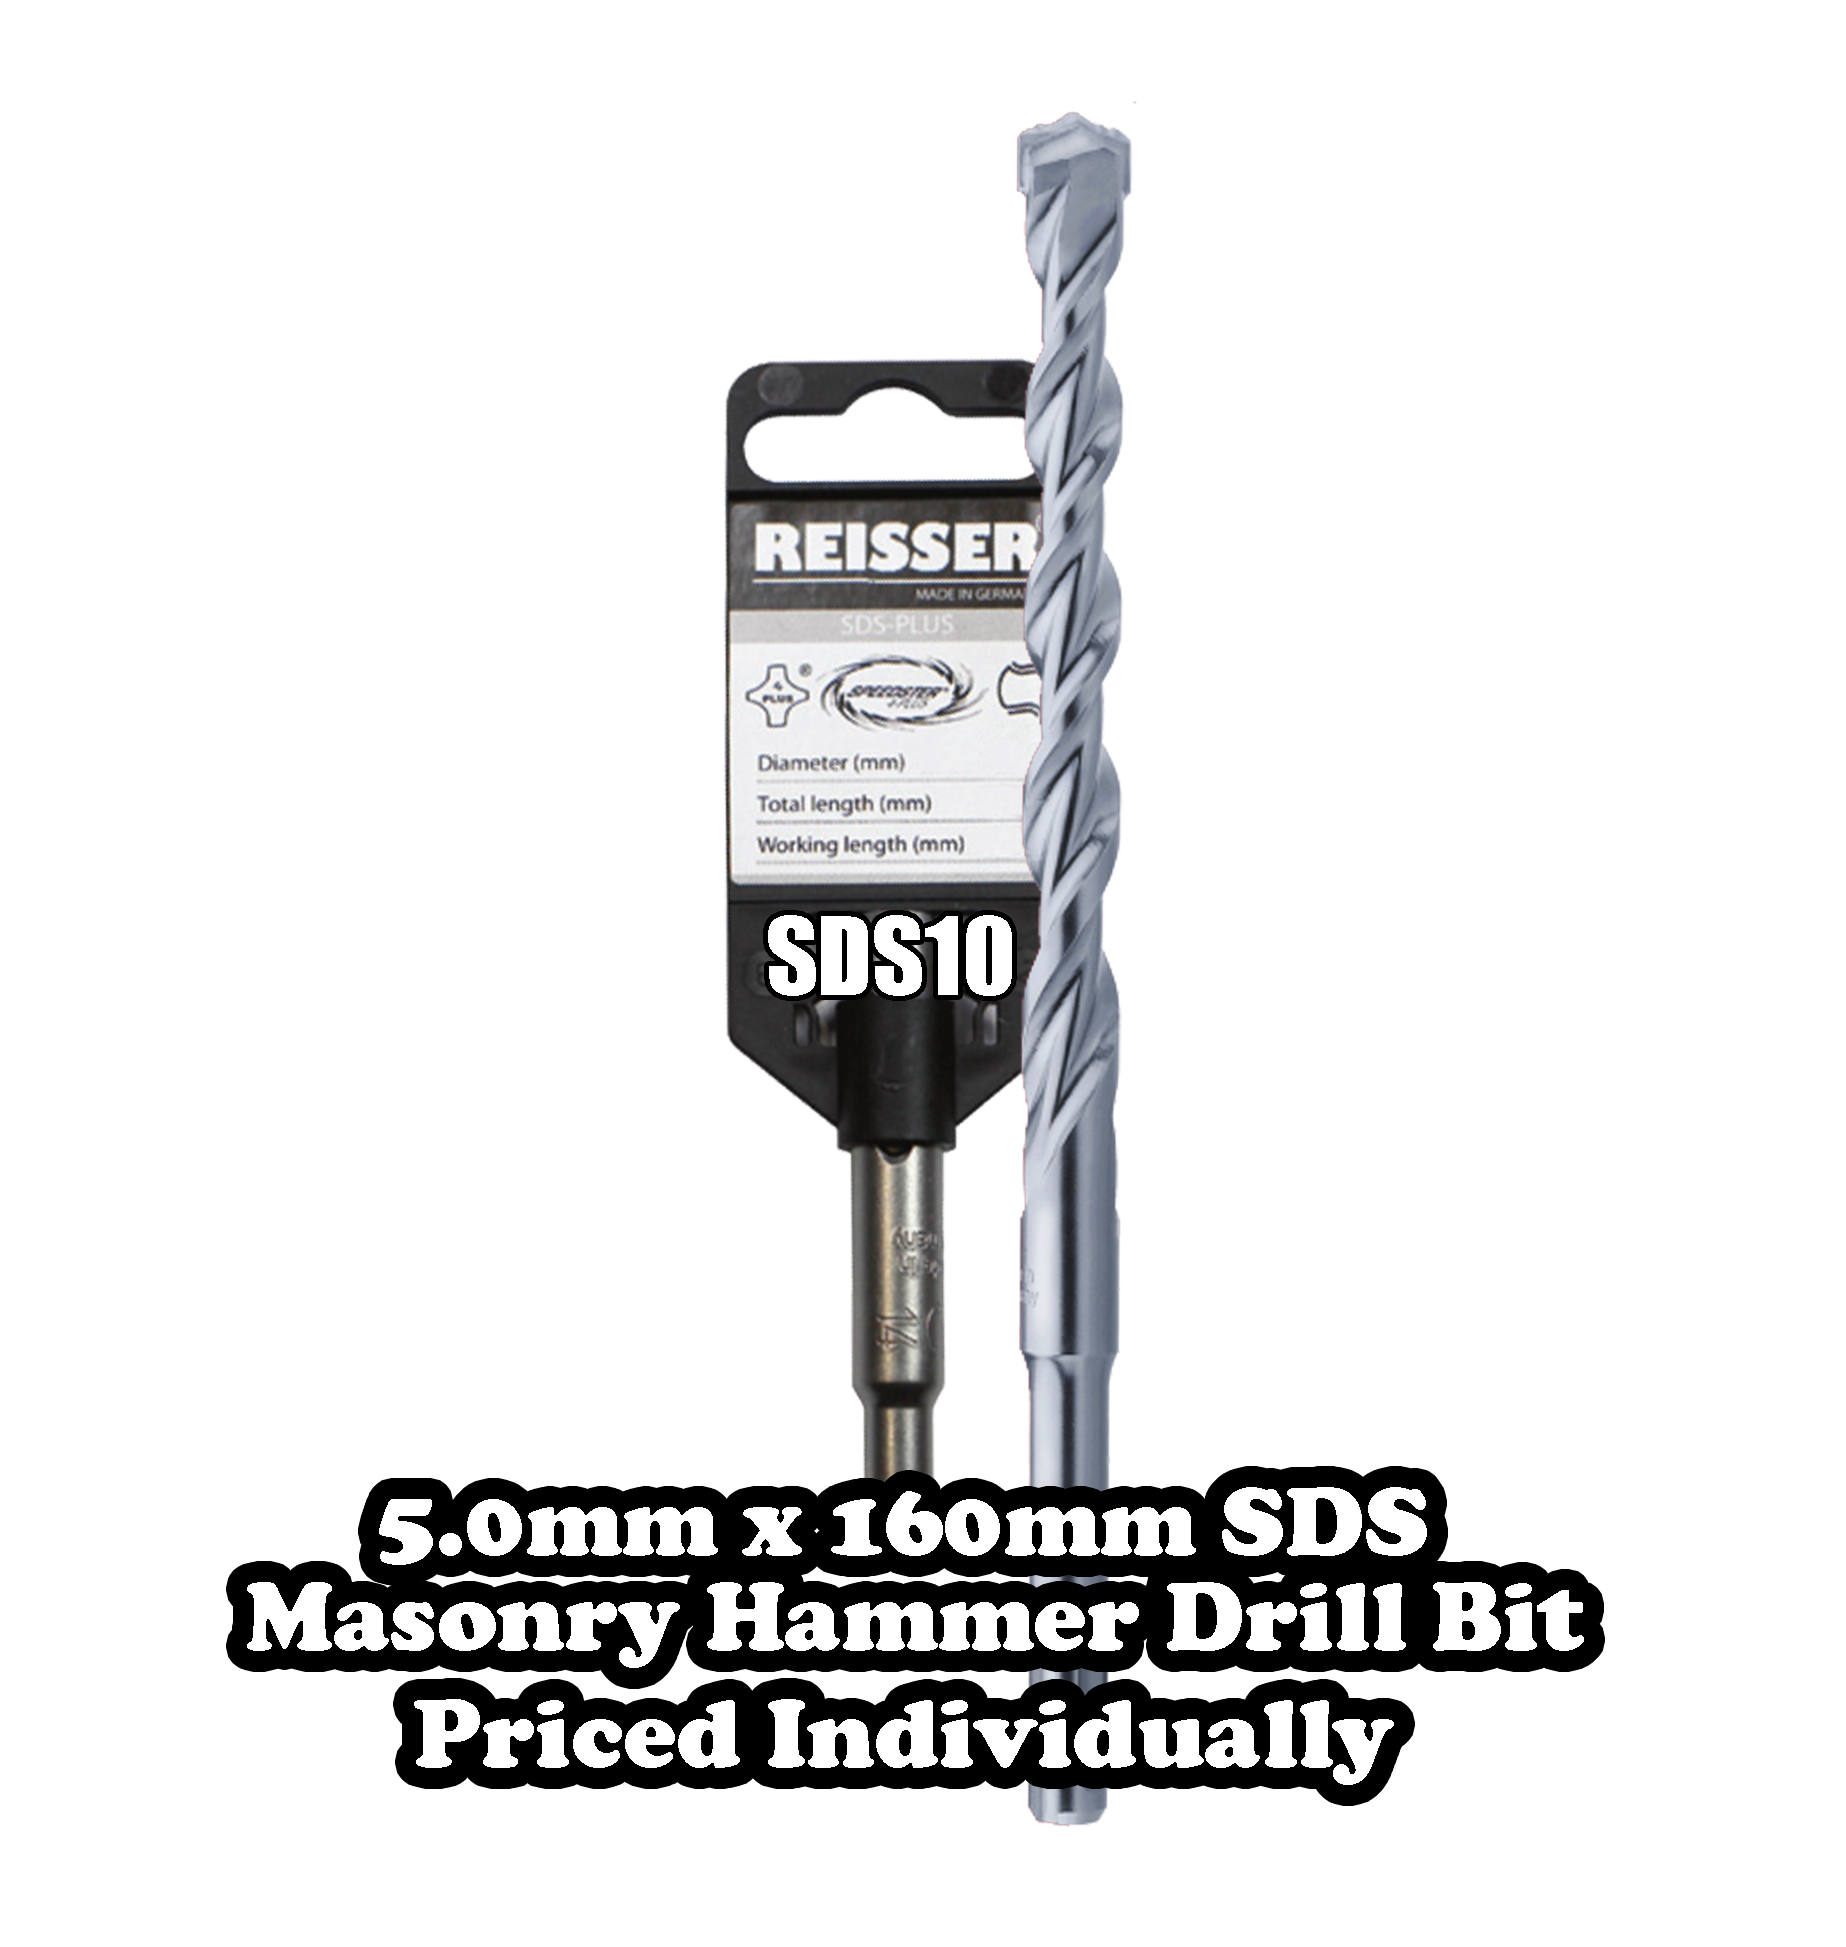 NEW PRICE 5.0mm x 160mm SDS Masonry Hammer Drill Bit